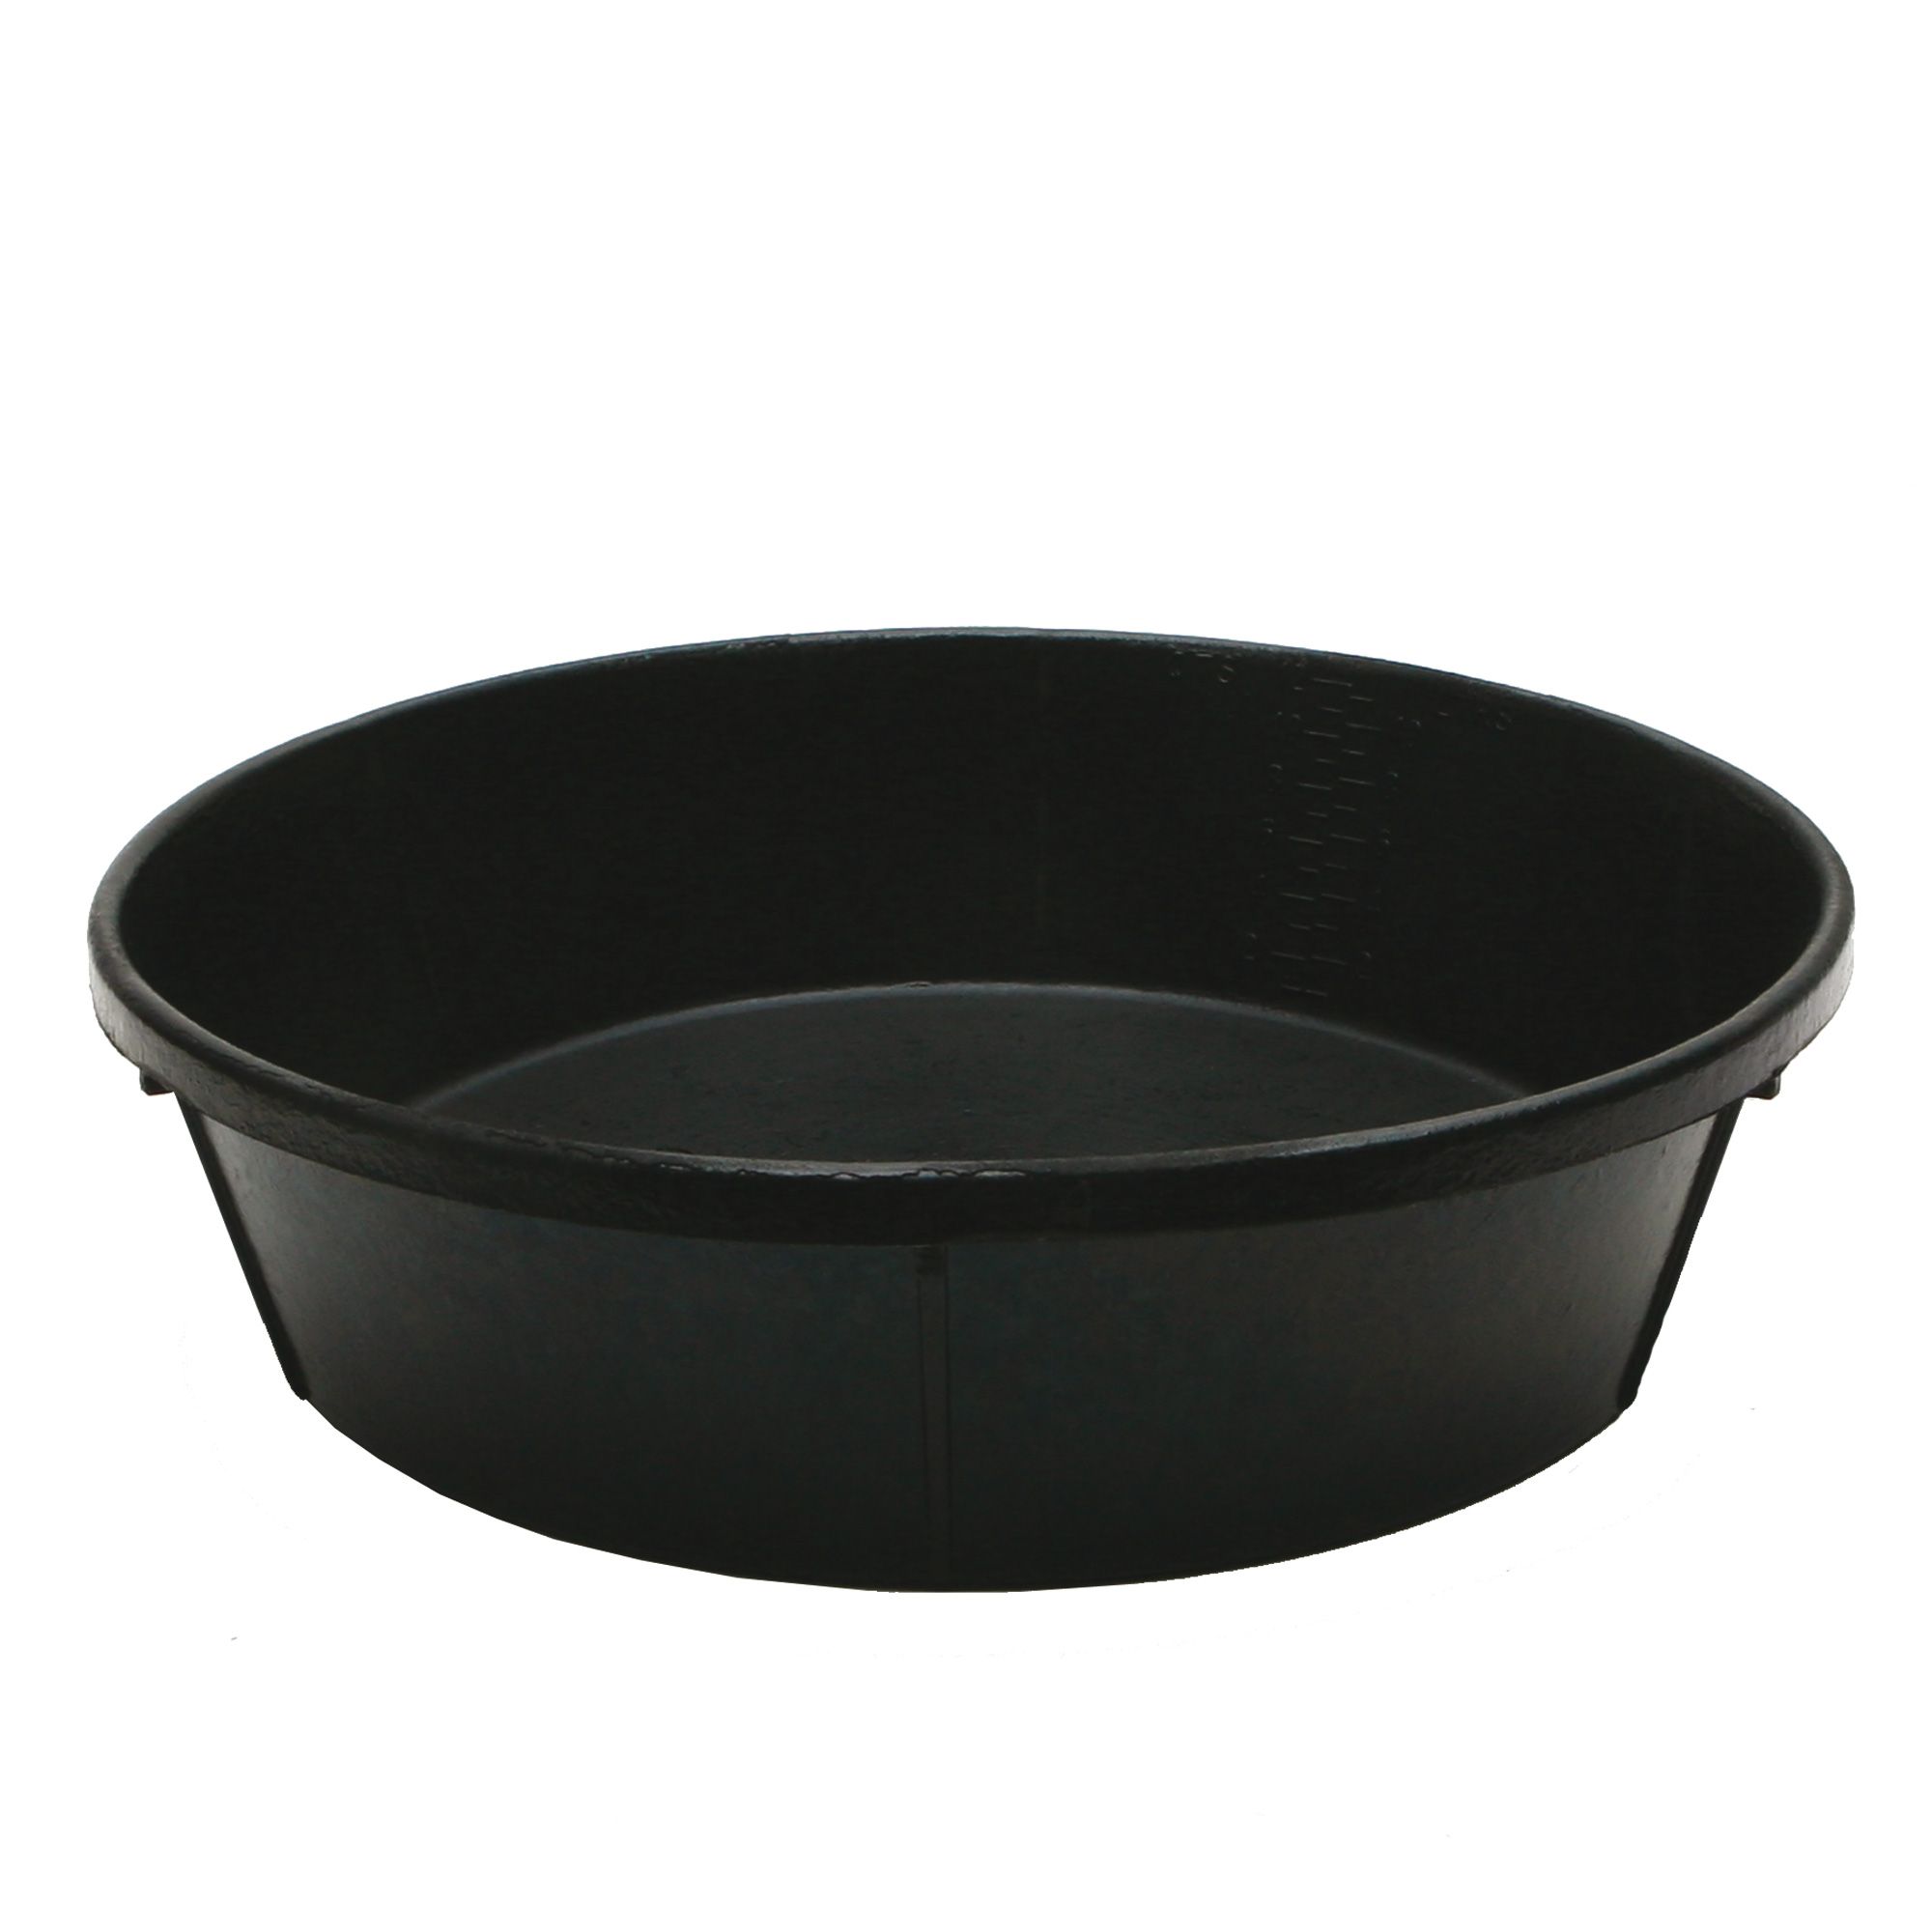 Little Giant Rubber Feed Pan Hp1 2 Quart Black for sale online 